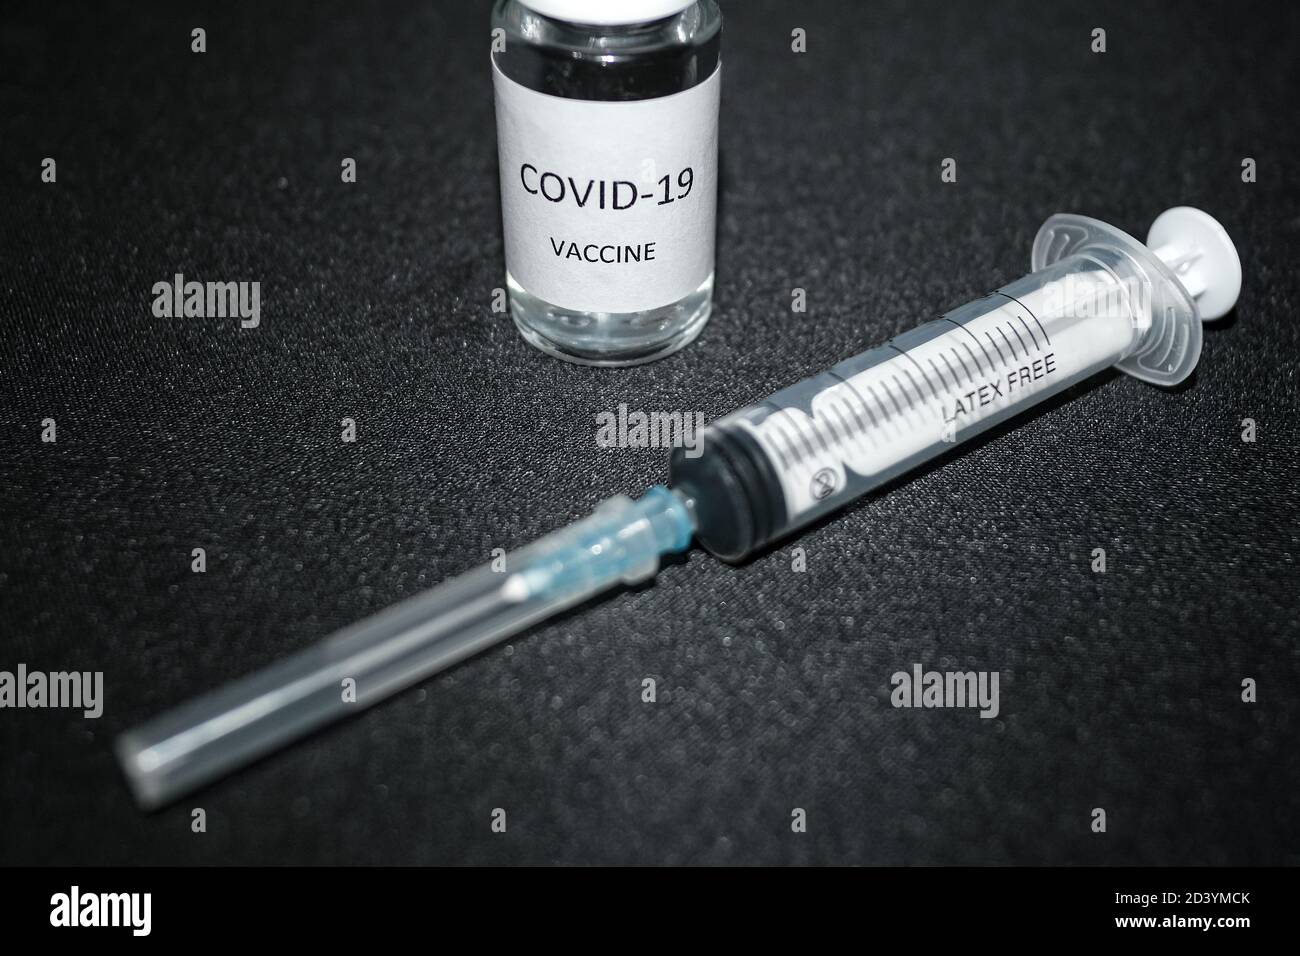 Covid19 vaccine container and empty syringe,coronavirus pandemic disease treatment Stock Photo